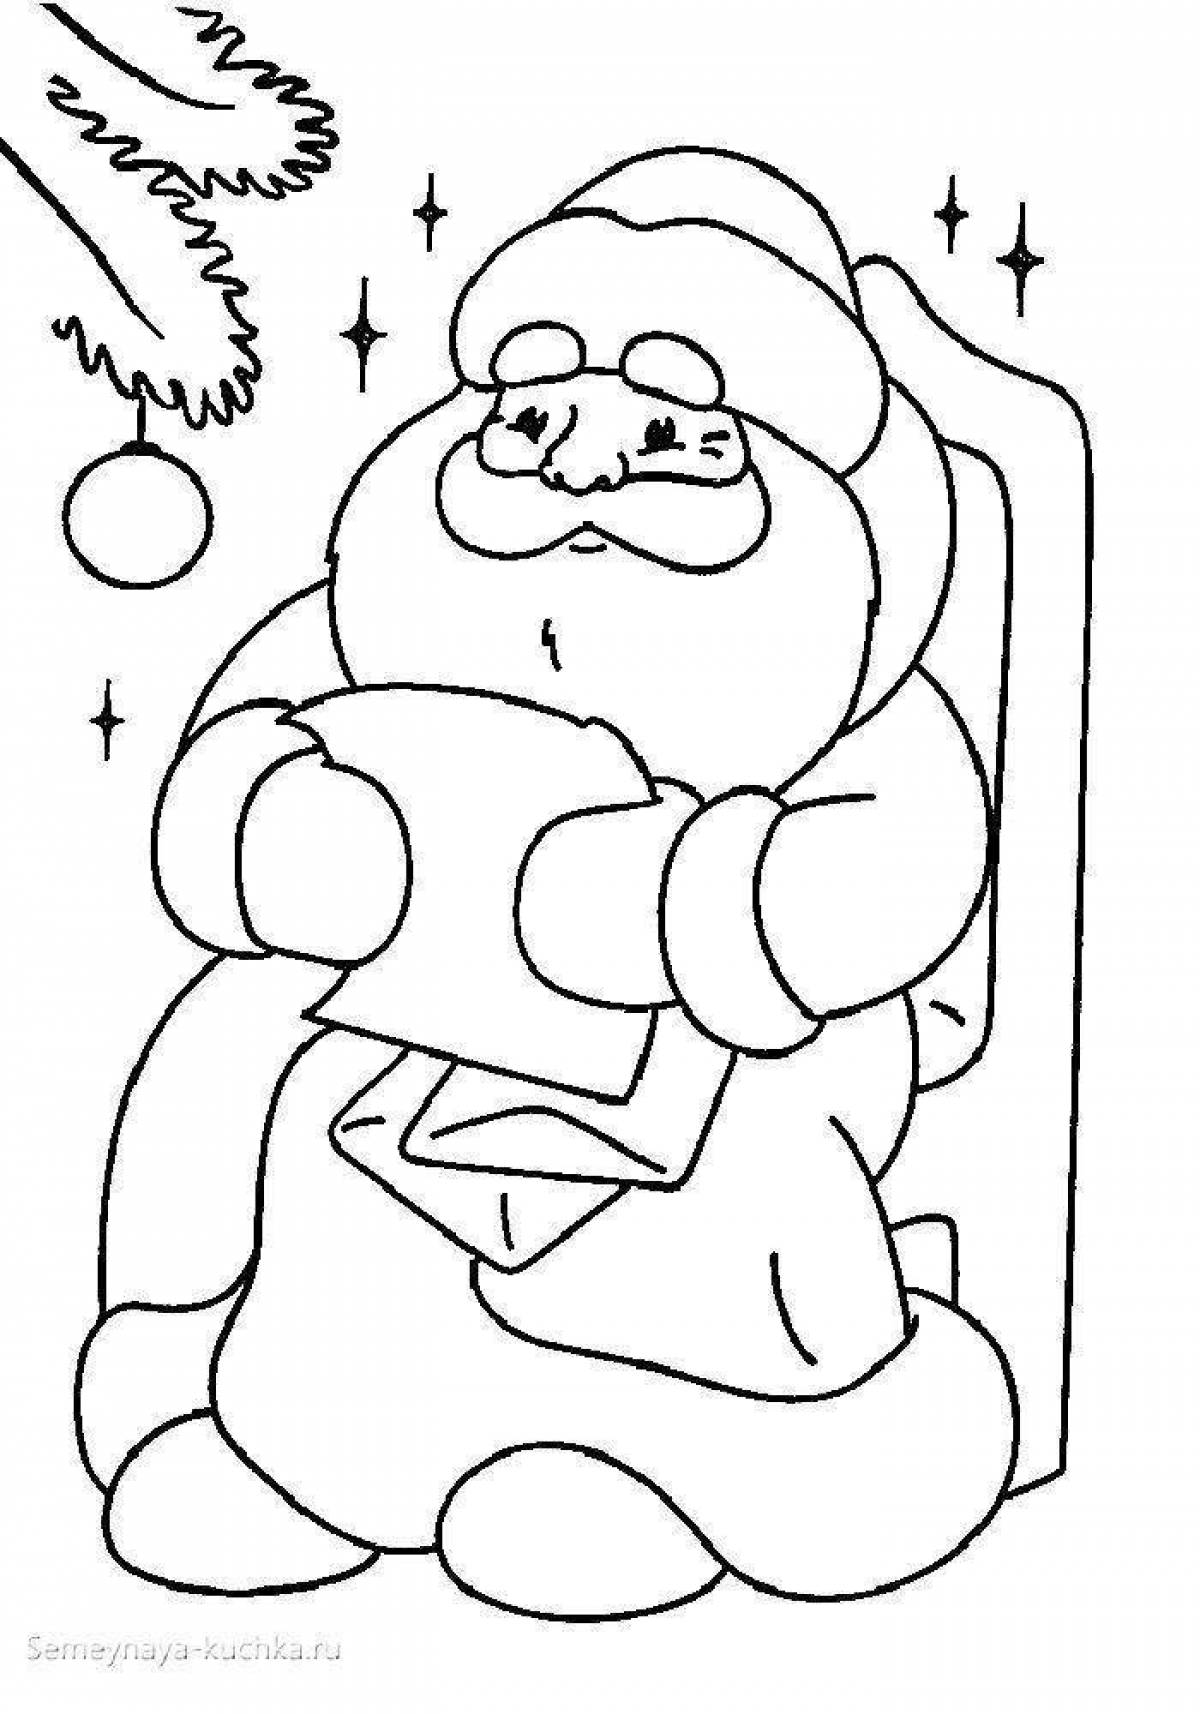 Live santa claus coloring book for kids